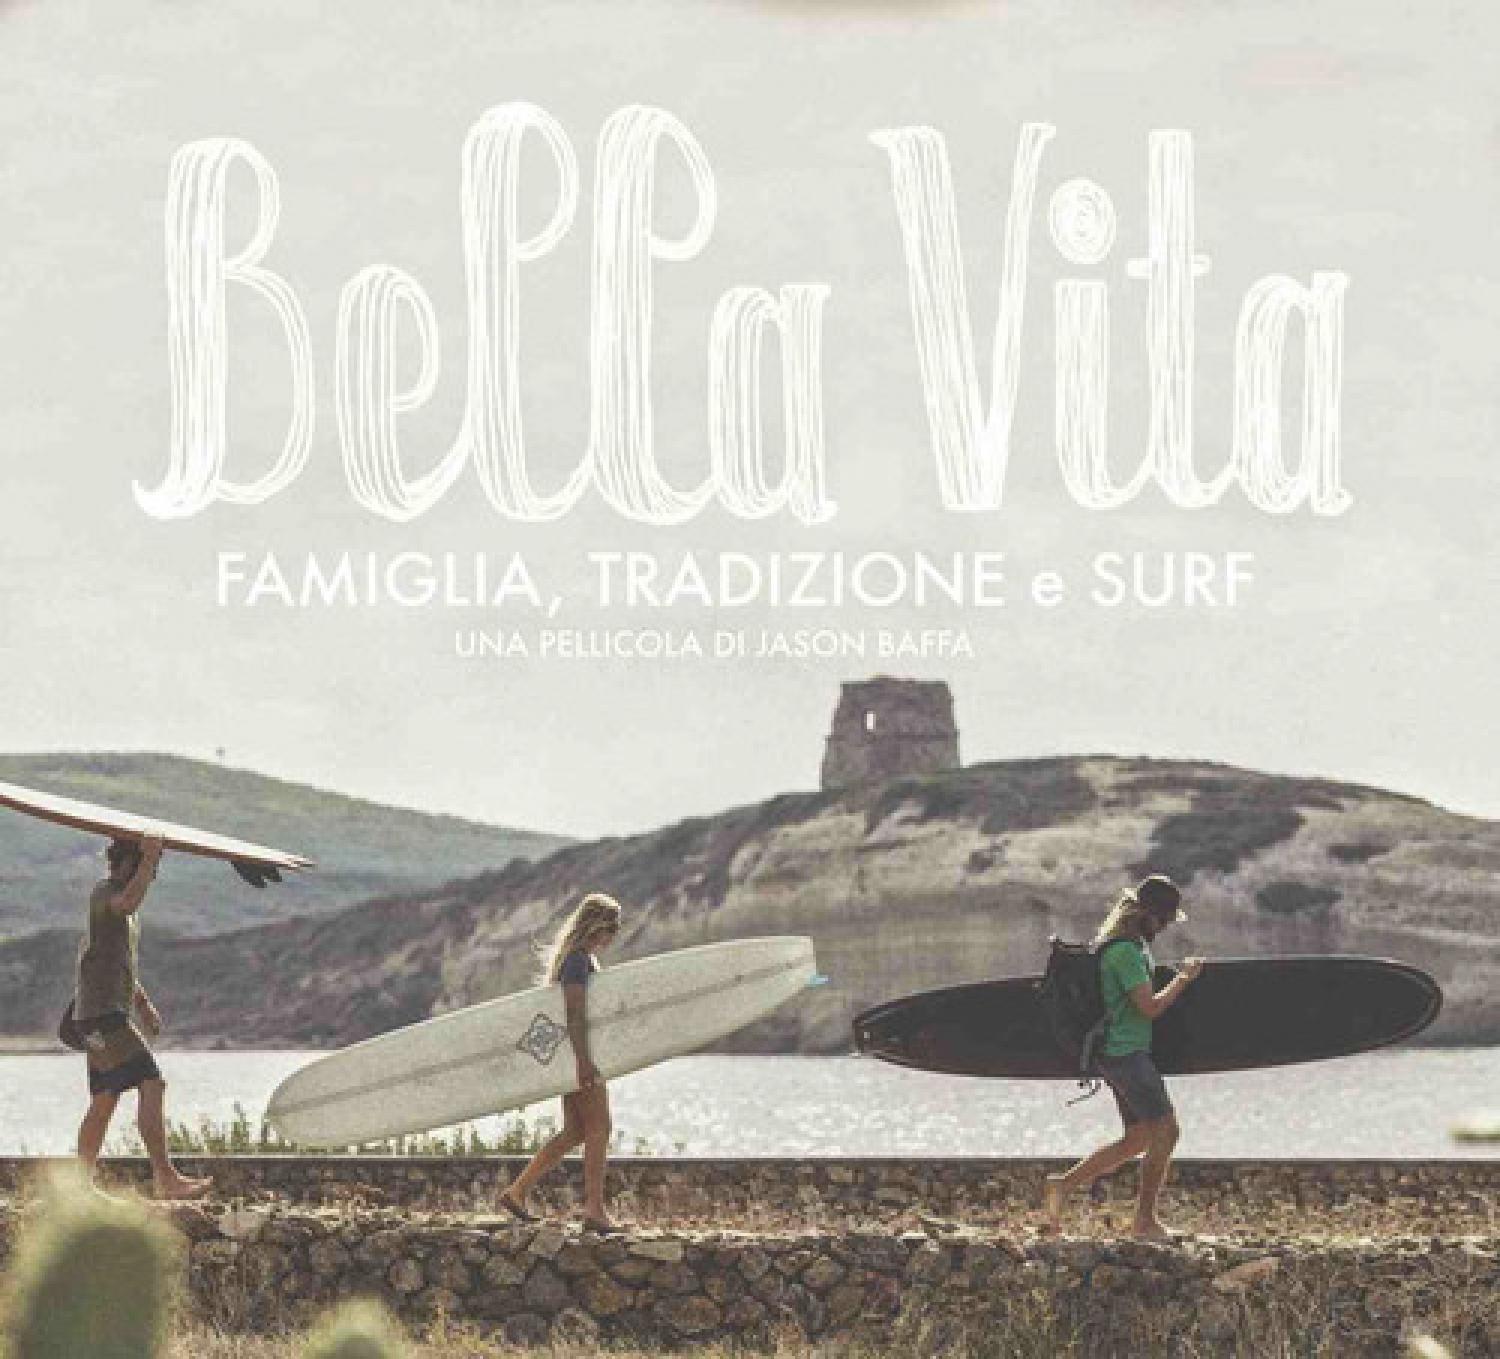 The DVD "Bella Vita" advance reservation start December 17 12:00 deadline